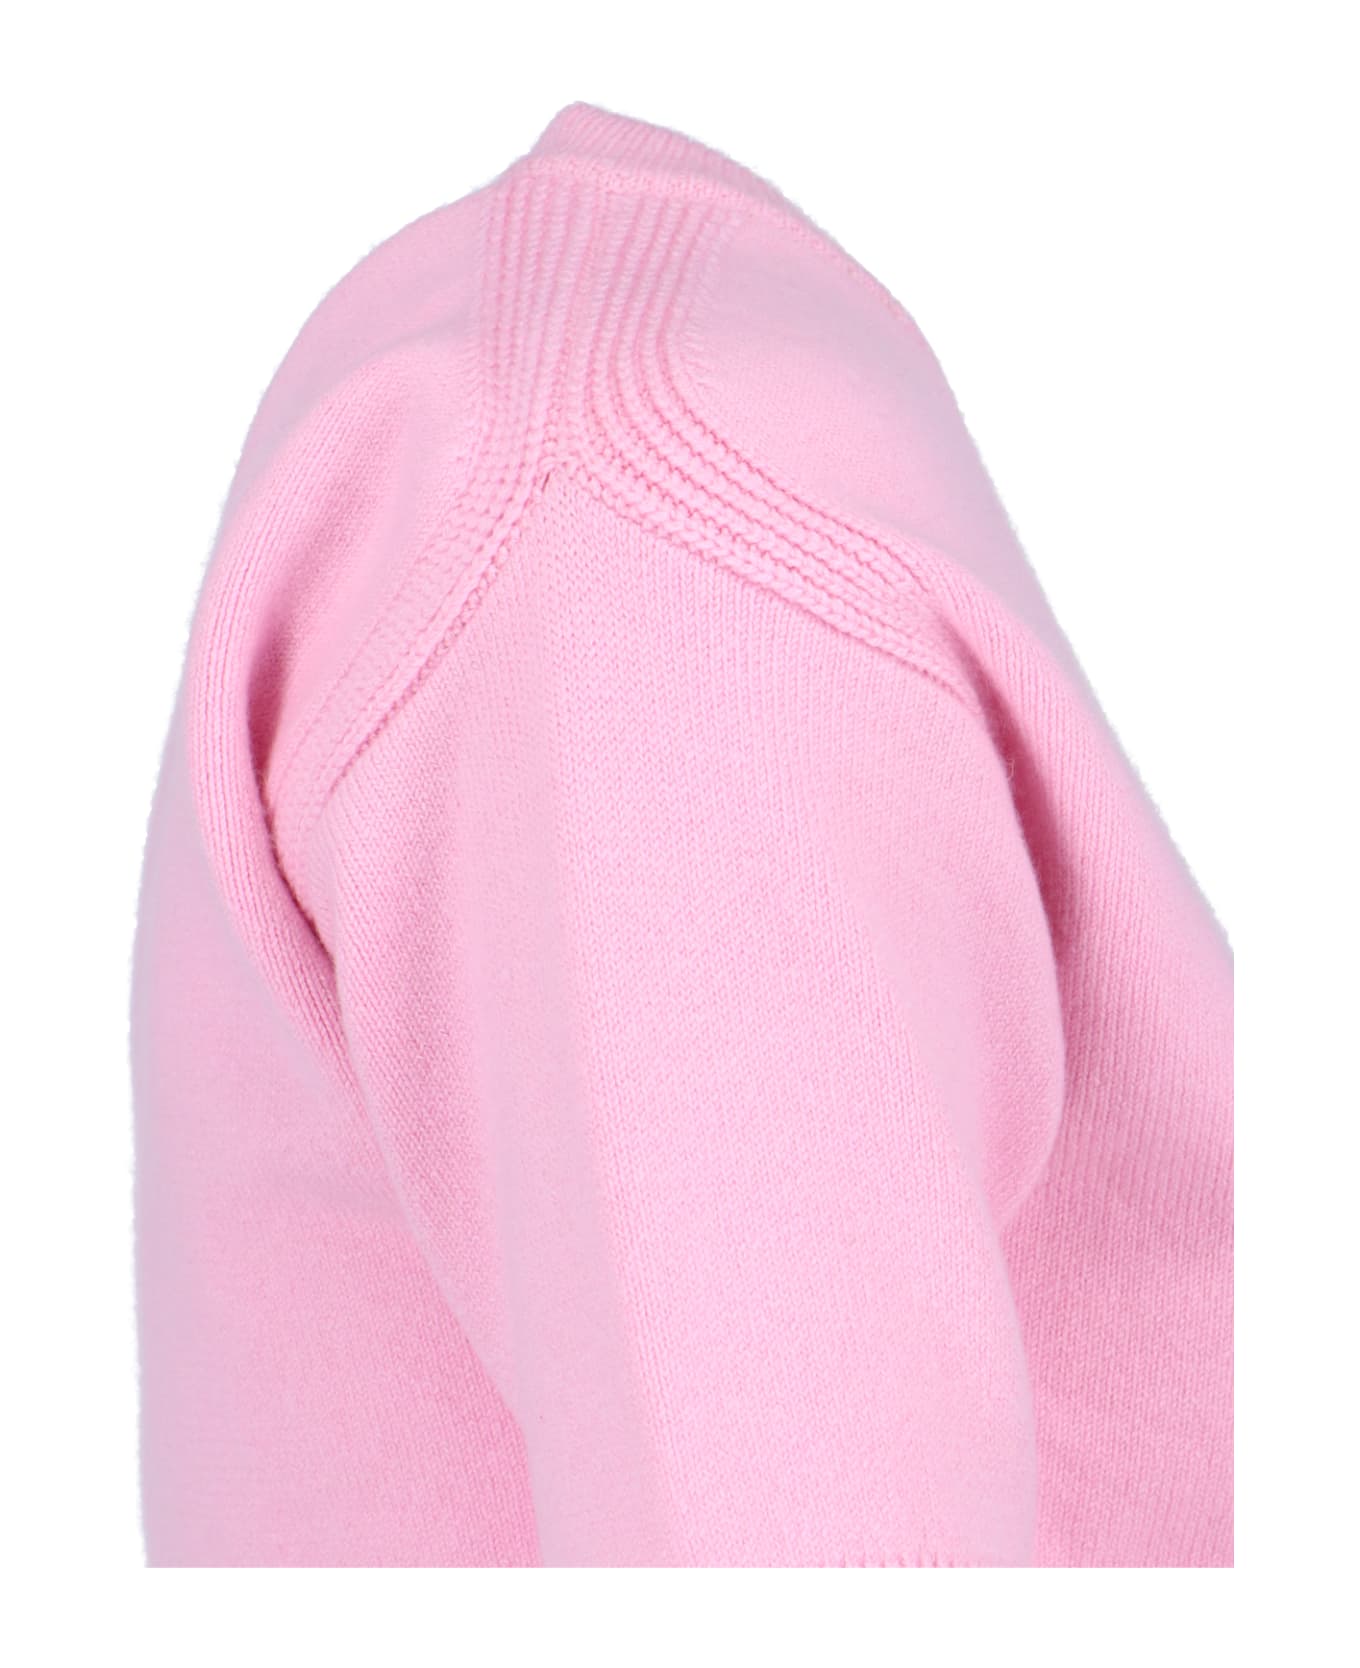 Sa Su Phi Knit Top - Pink